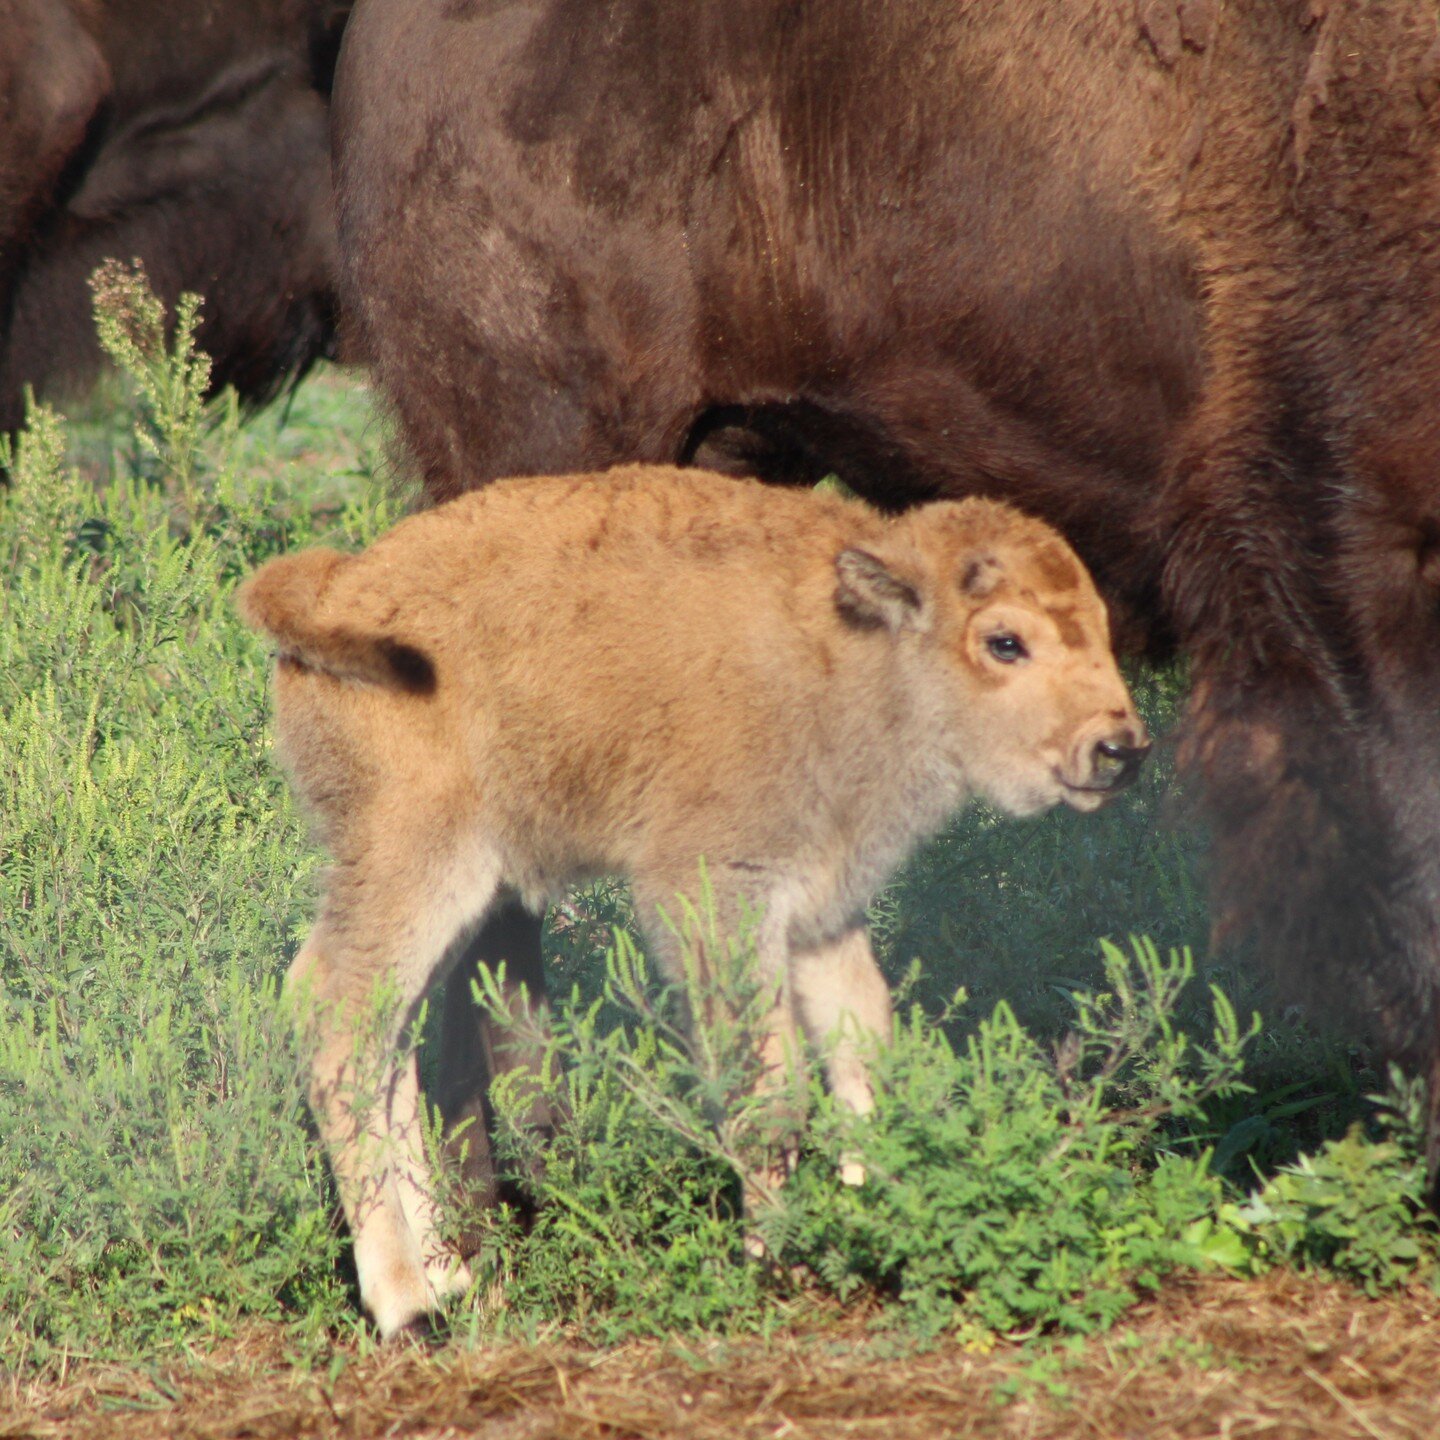 #bisoncalf#firstbaby#americanbison#bison#farmlifebestlife#millersburgpa